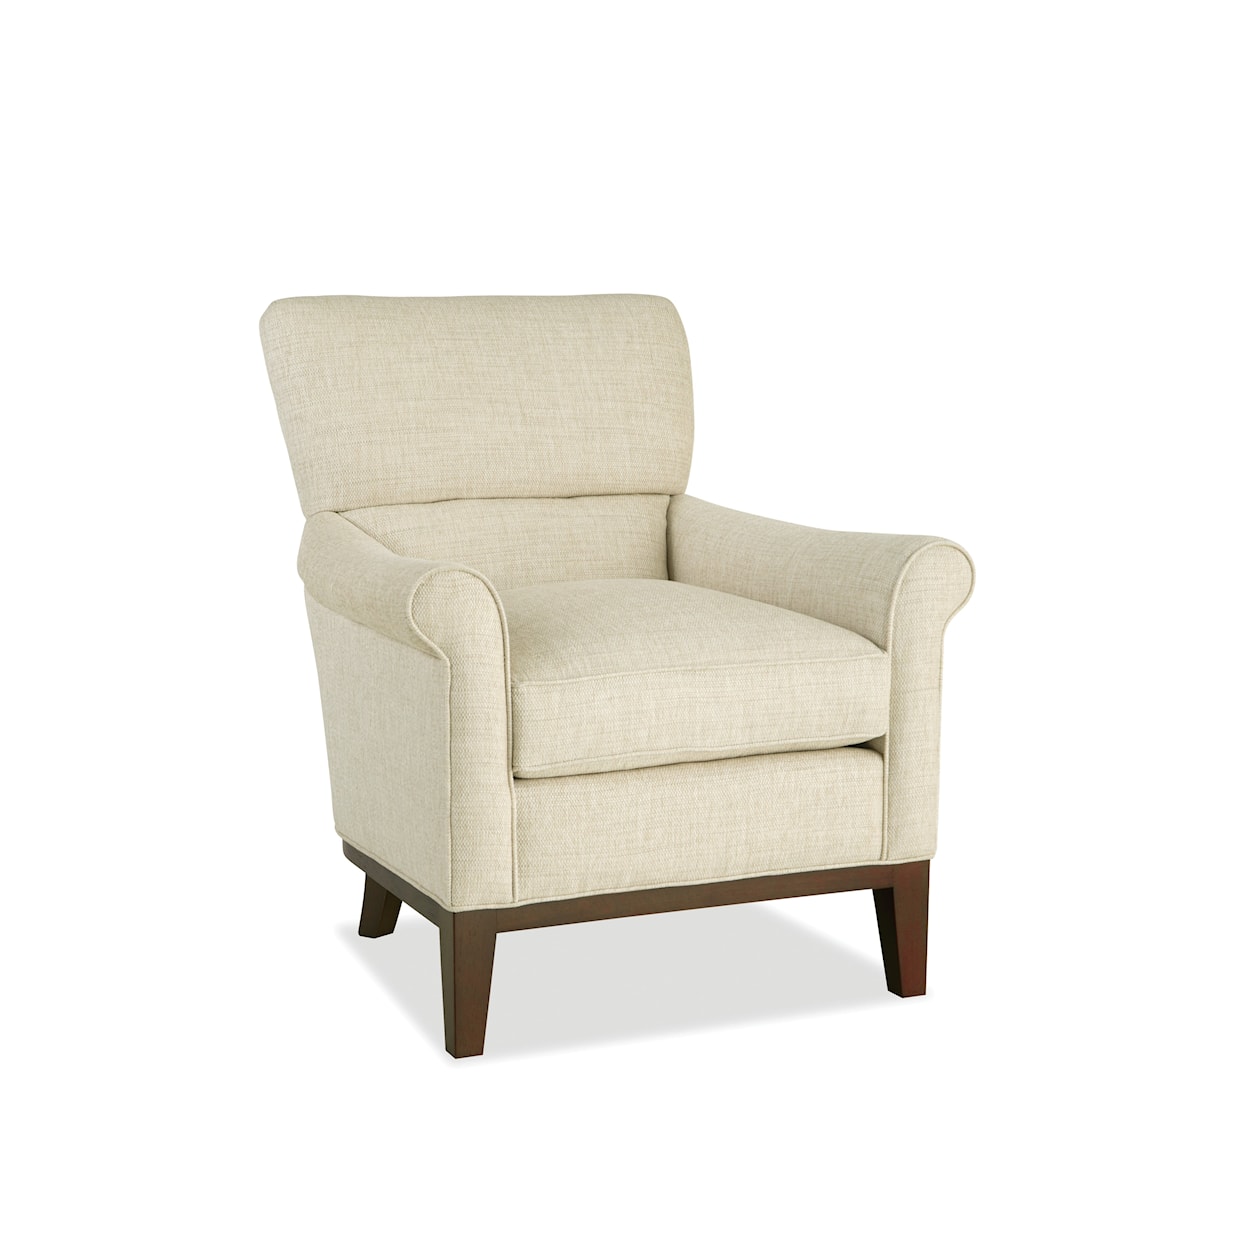 Hickorycraft 035410BD Chair